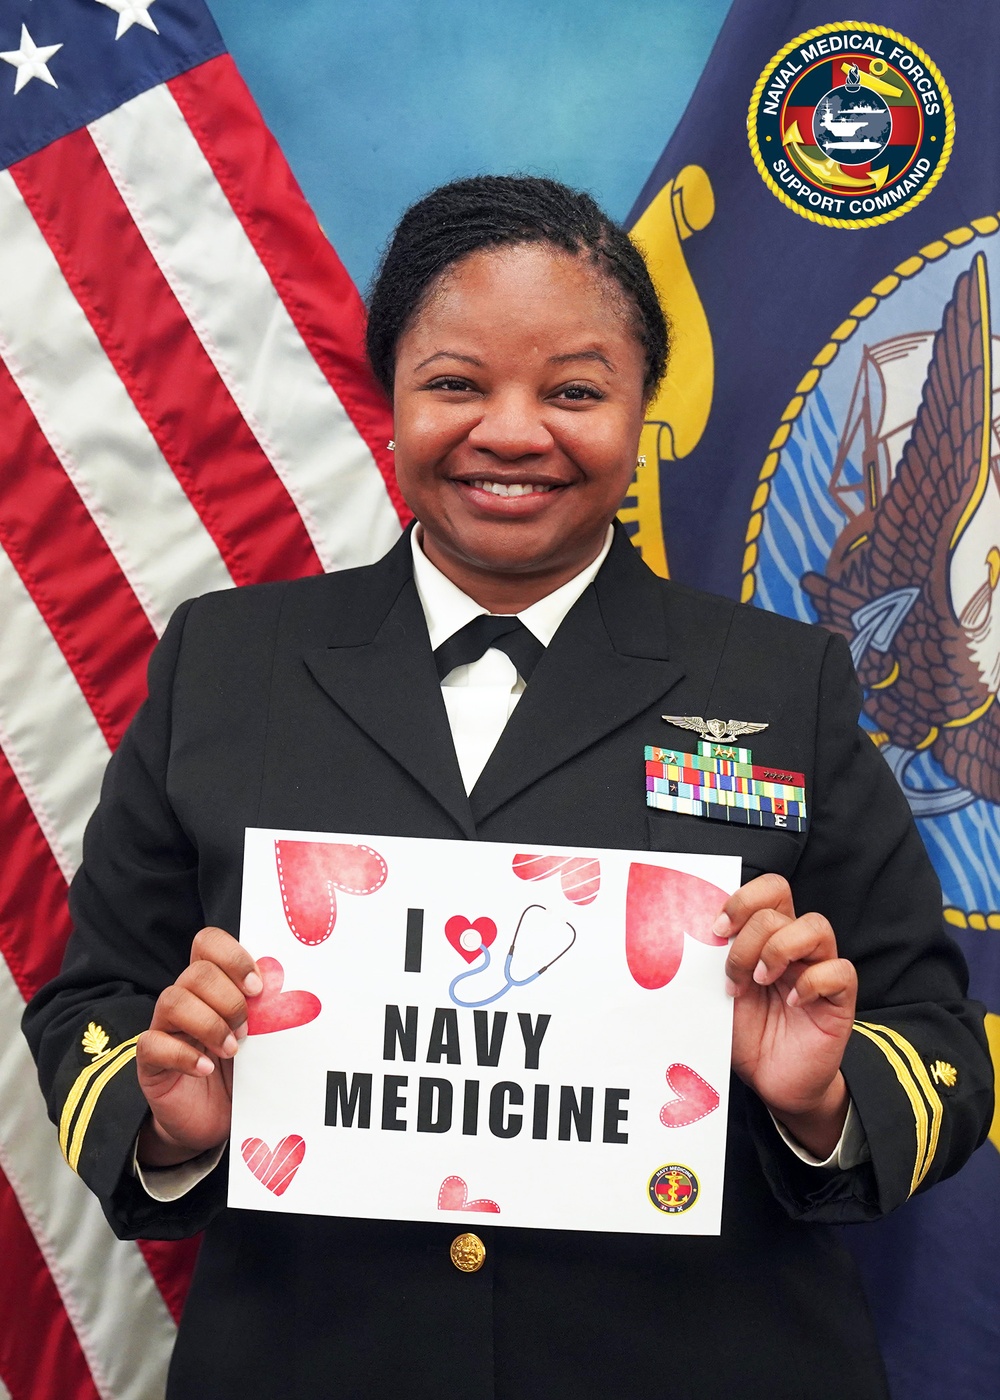 Why I Love Navy Medicine